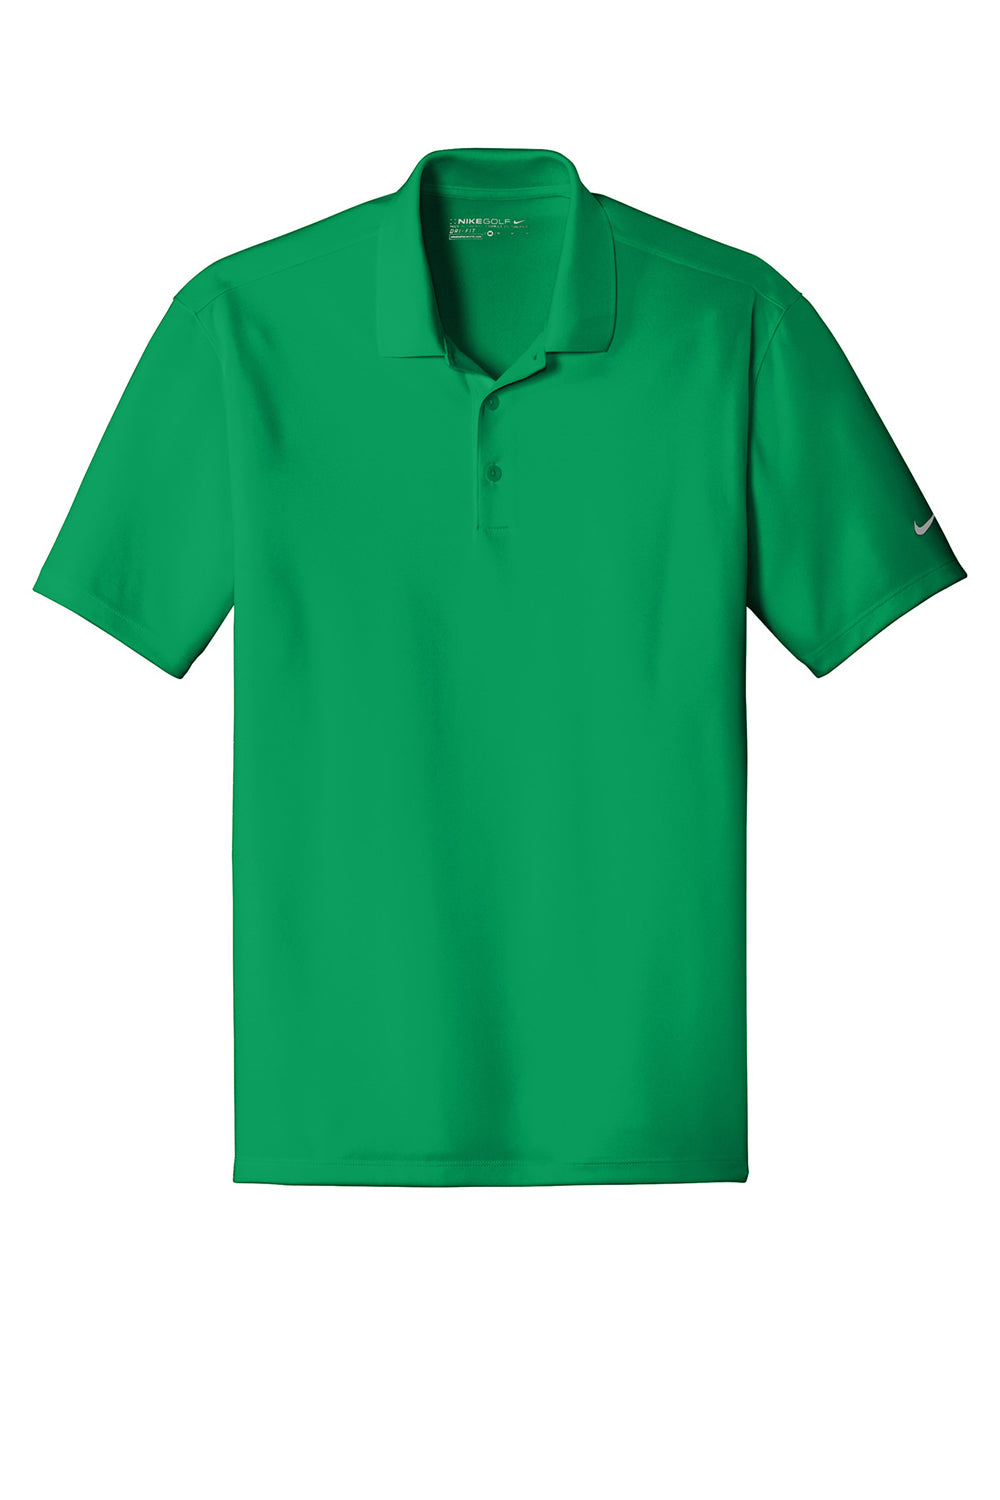 Nike 838956 Mens Players Dri-Fit Moisture Wicking Short Sleeve Polo Shirt Pine Green Flat Front